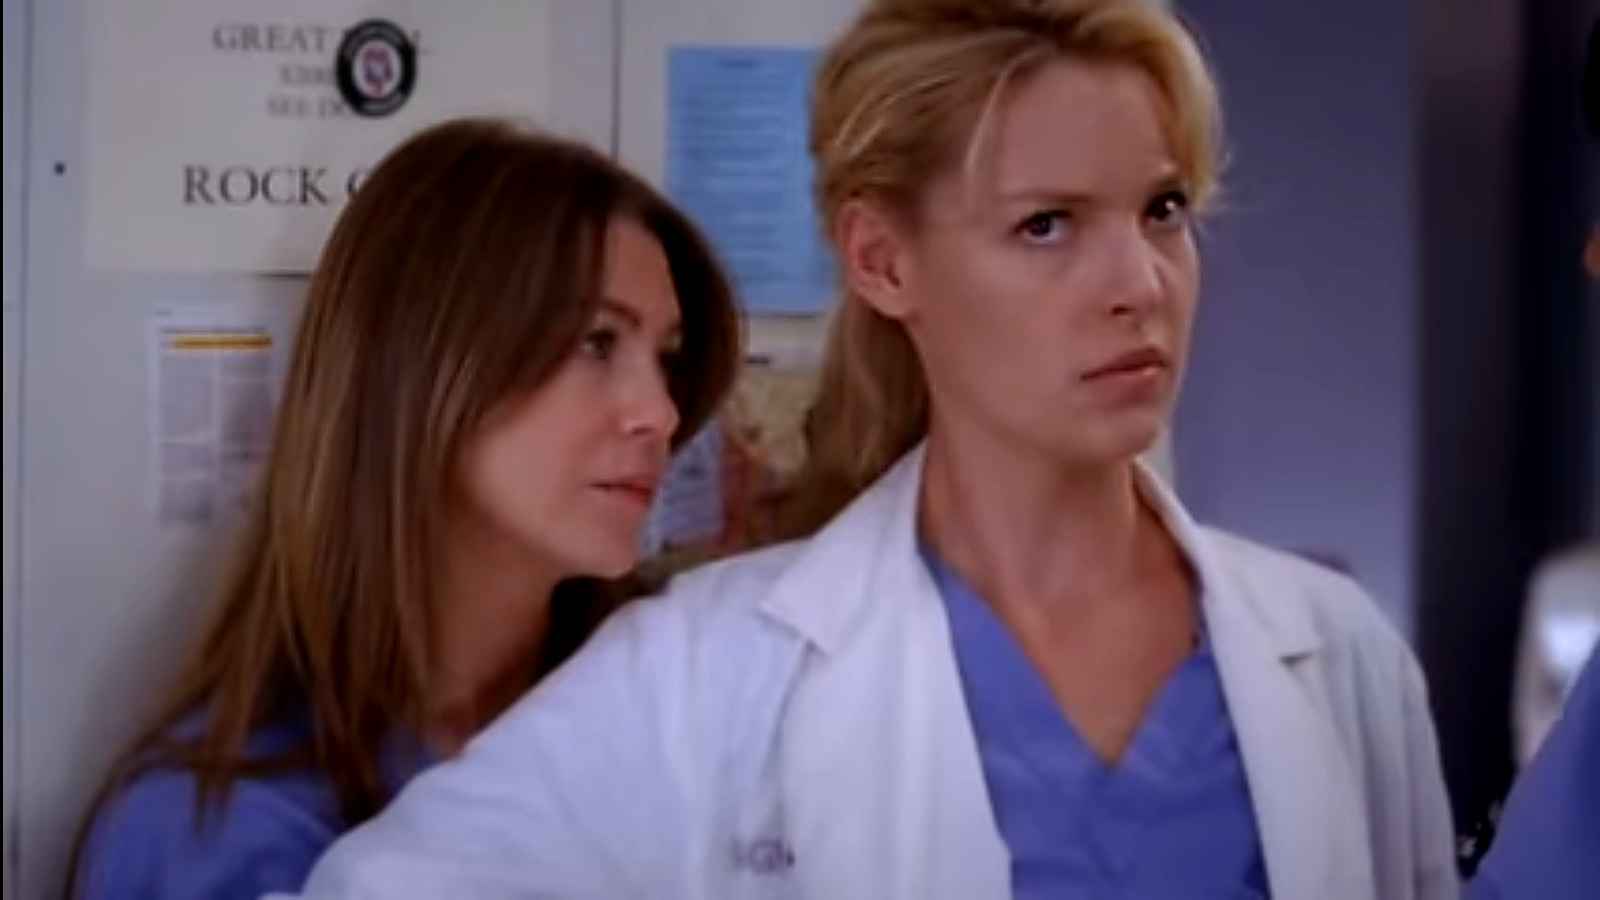 Grey's Anatomy stars Ellen Pompeo and Katherine Heigl